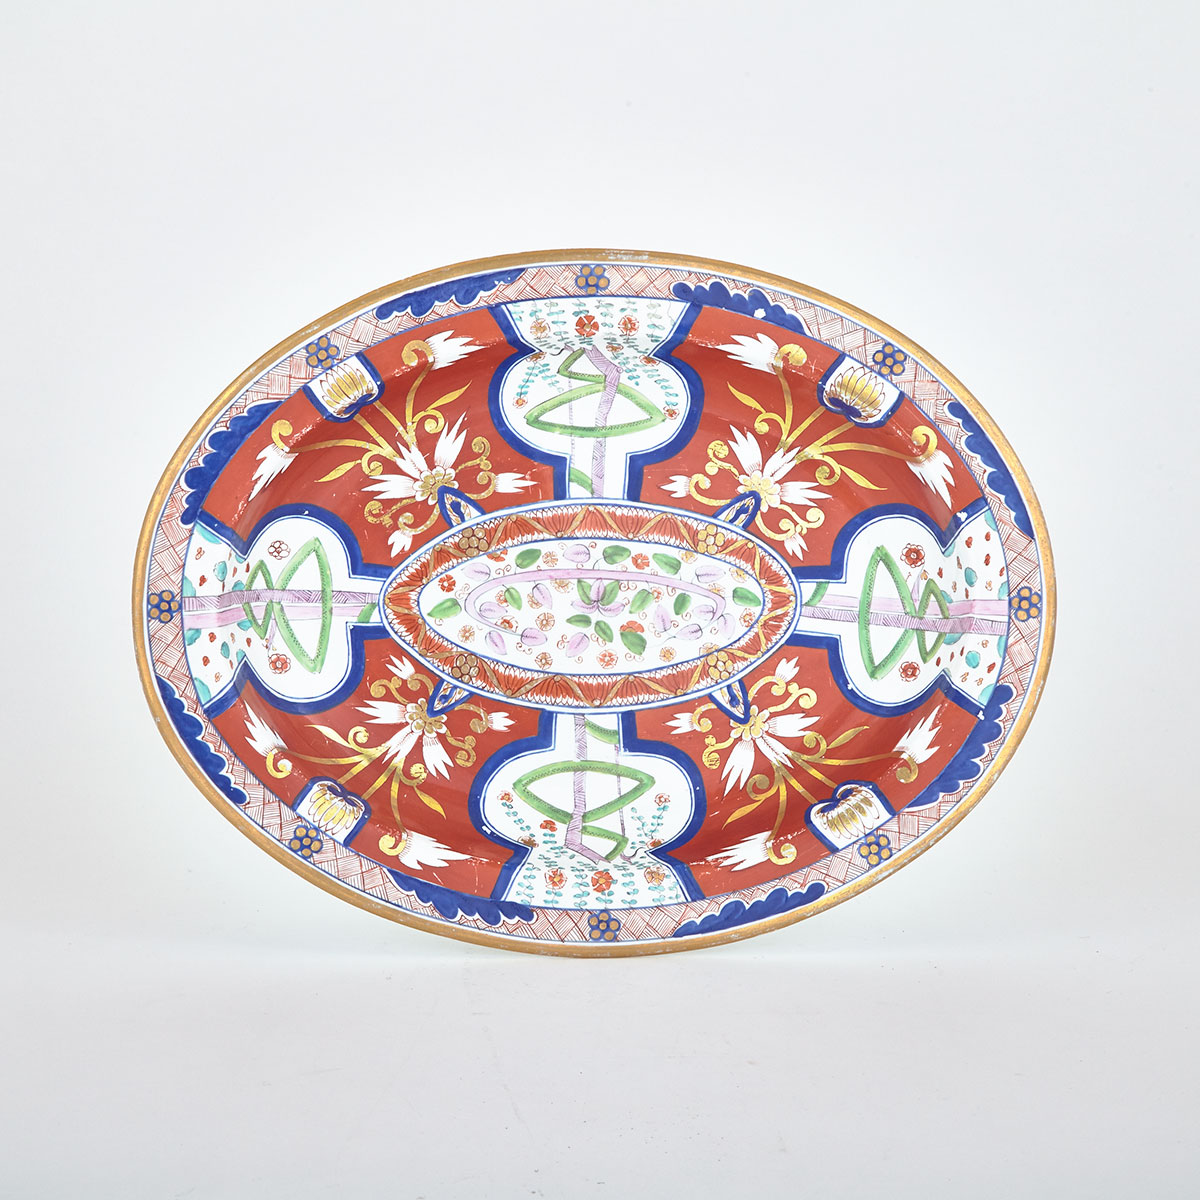 English Porcelain ‘Dollar’ Pattern Oval Platter, probably Spode, c.1805-10